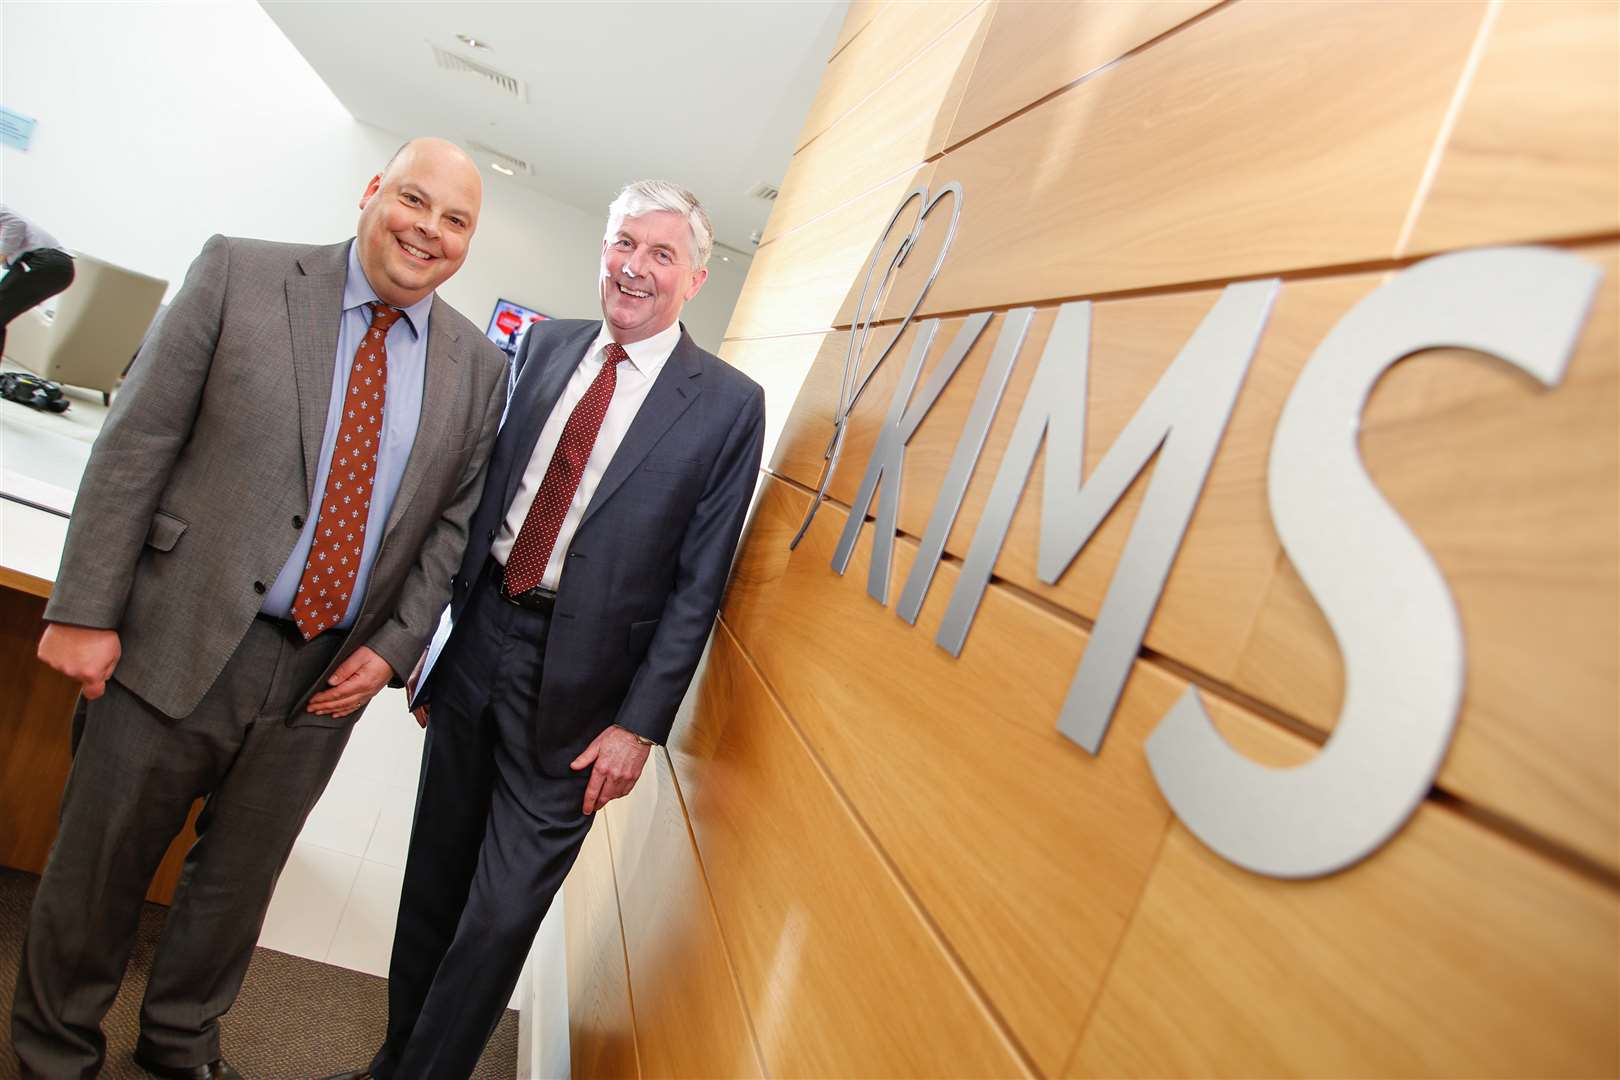 Former KIMS Hospital president Steven Bernstein, left, and executive chairman Peter Goddard